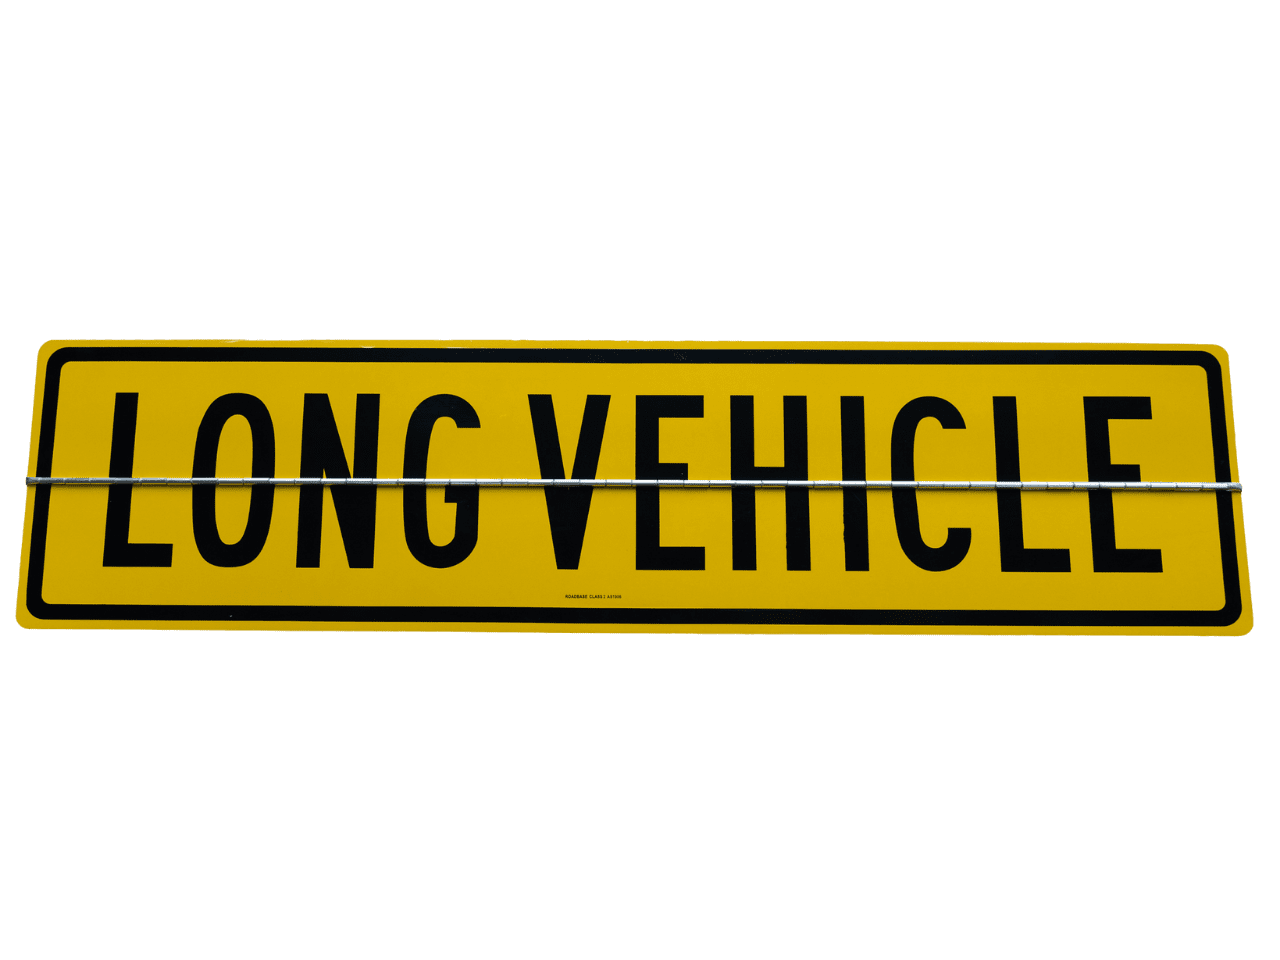 Long Vehicle Hinged Metal Sign